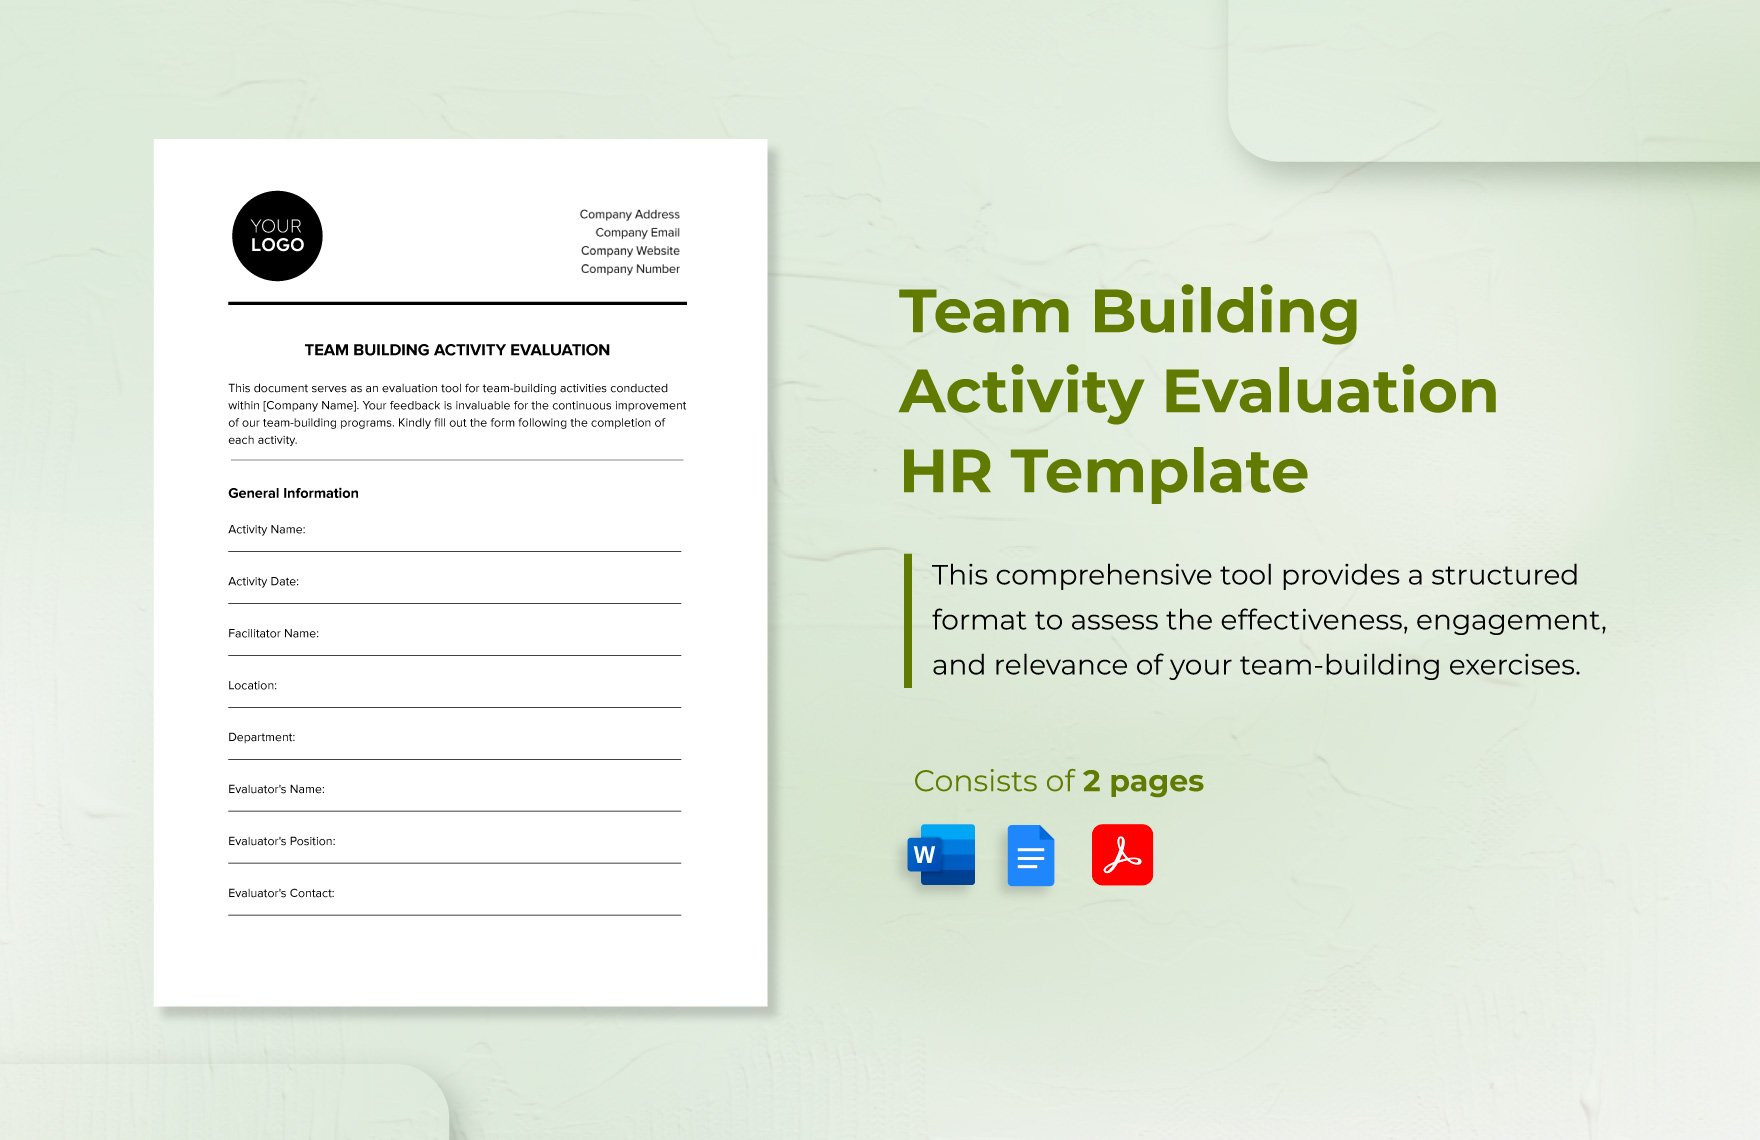 Team Building Activity Evaluation HR Template